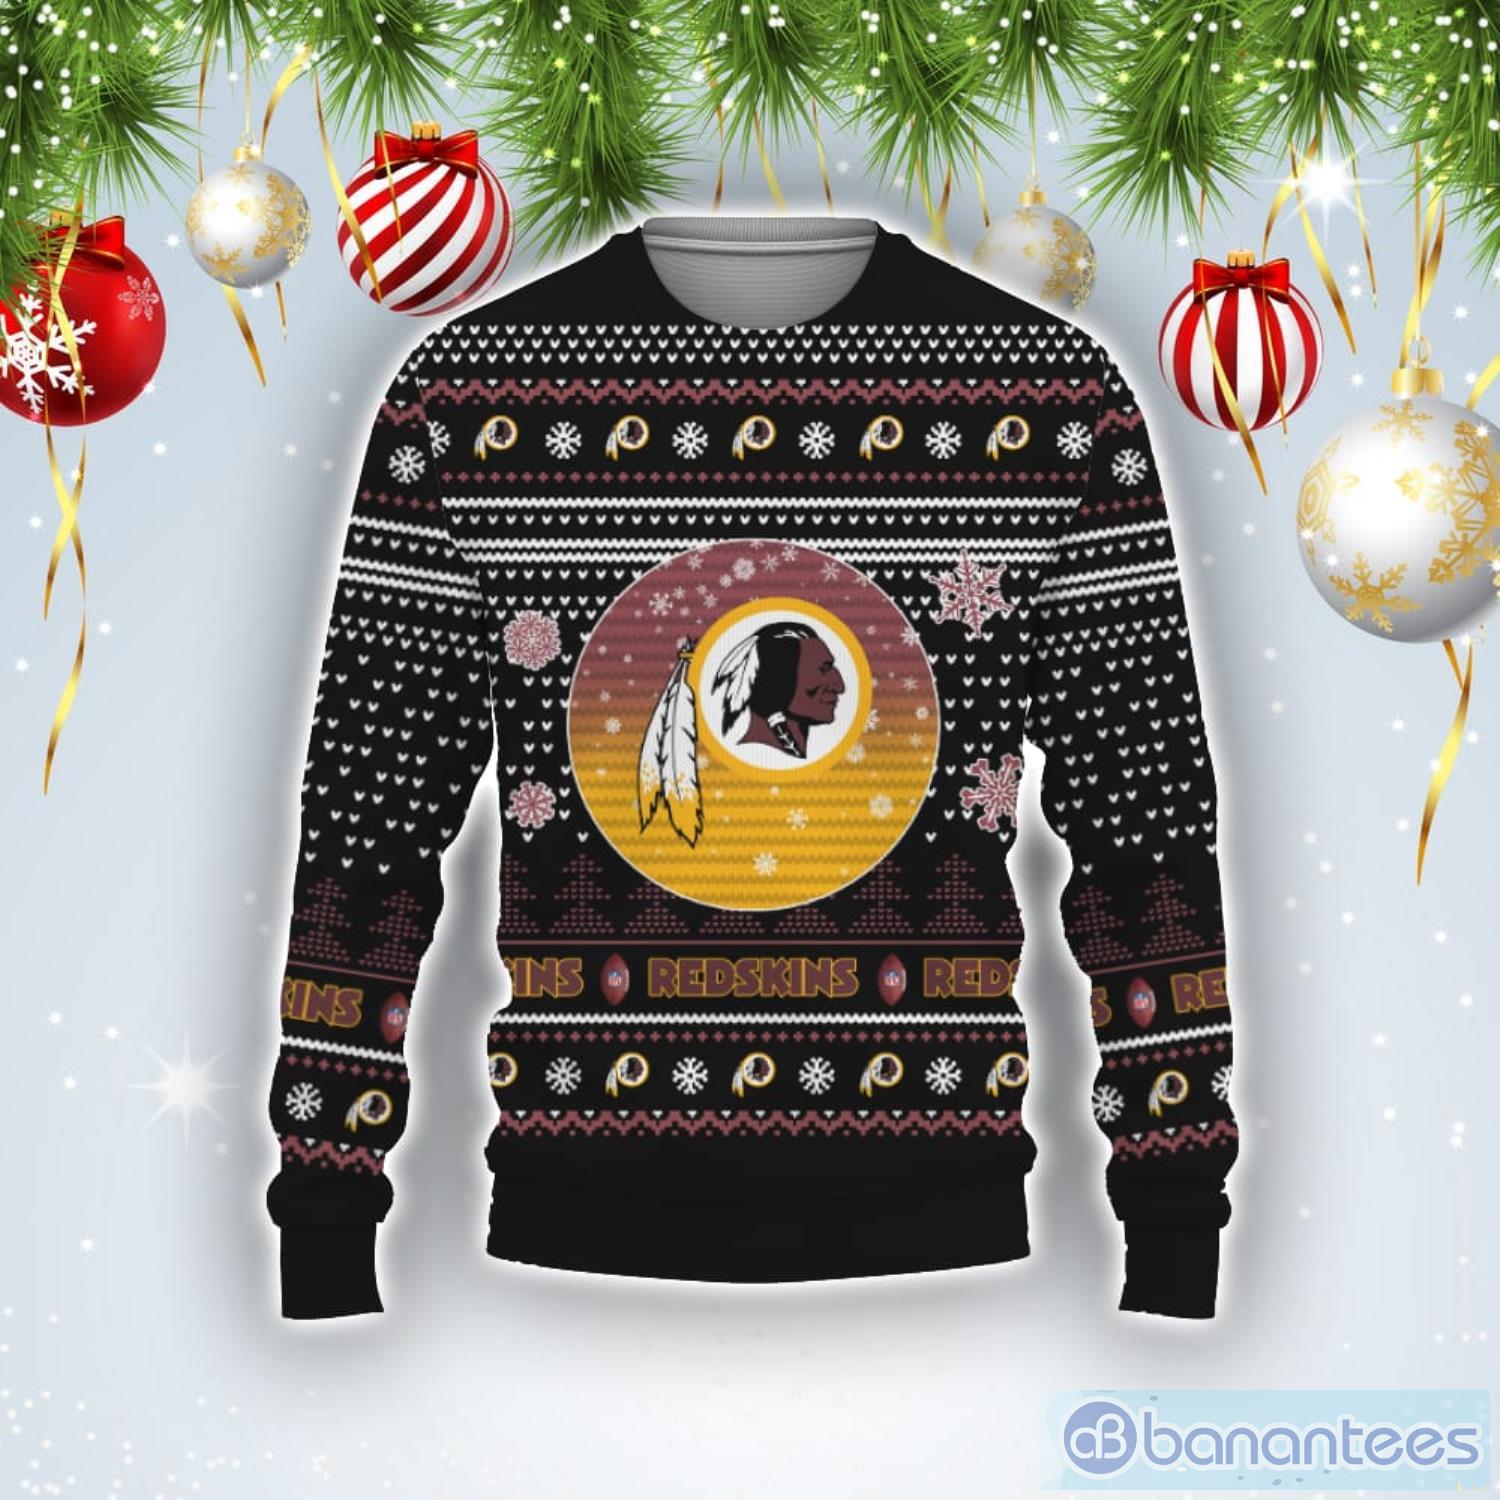 Christmas Gift Washington Redskins Ugly Christmas Sweater Product Photo 1